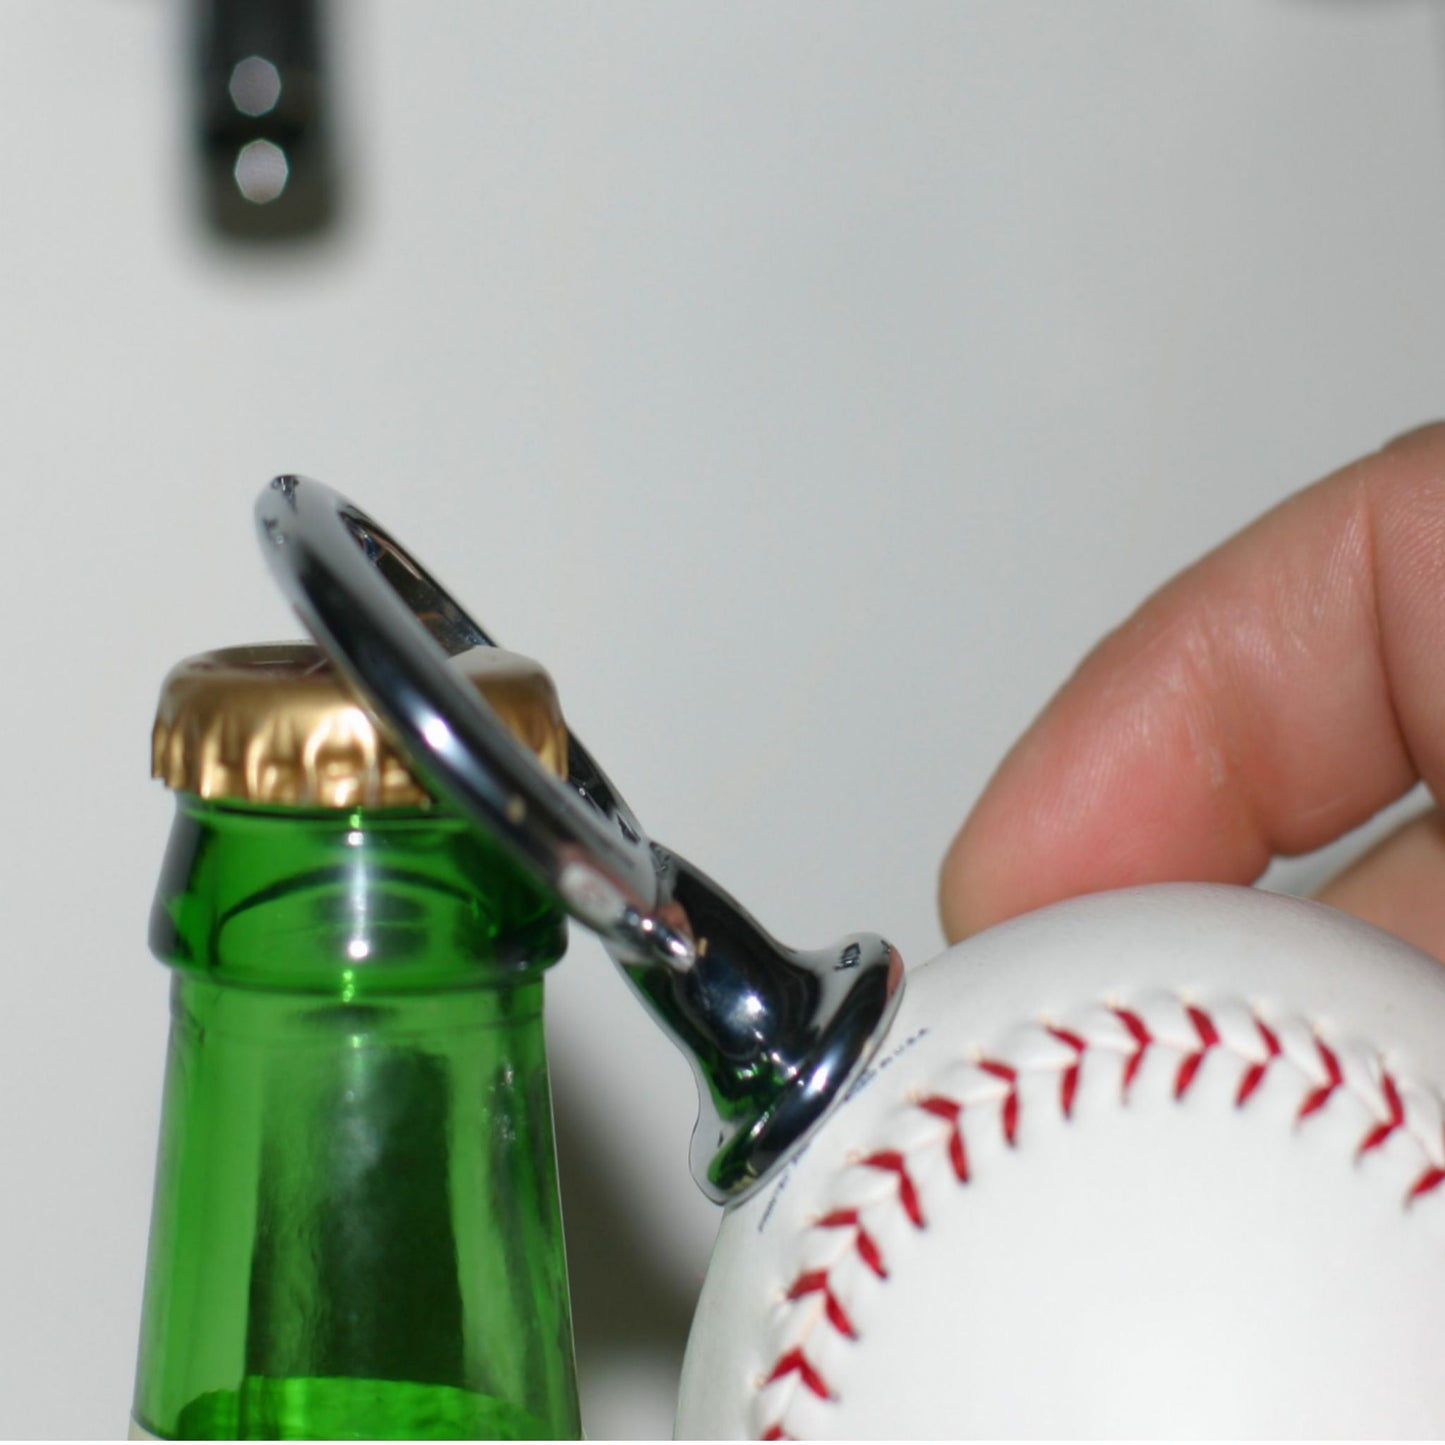 Miami Marlins Licensed Baseball Fulcrum Series Bottle Opener